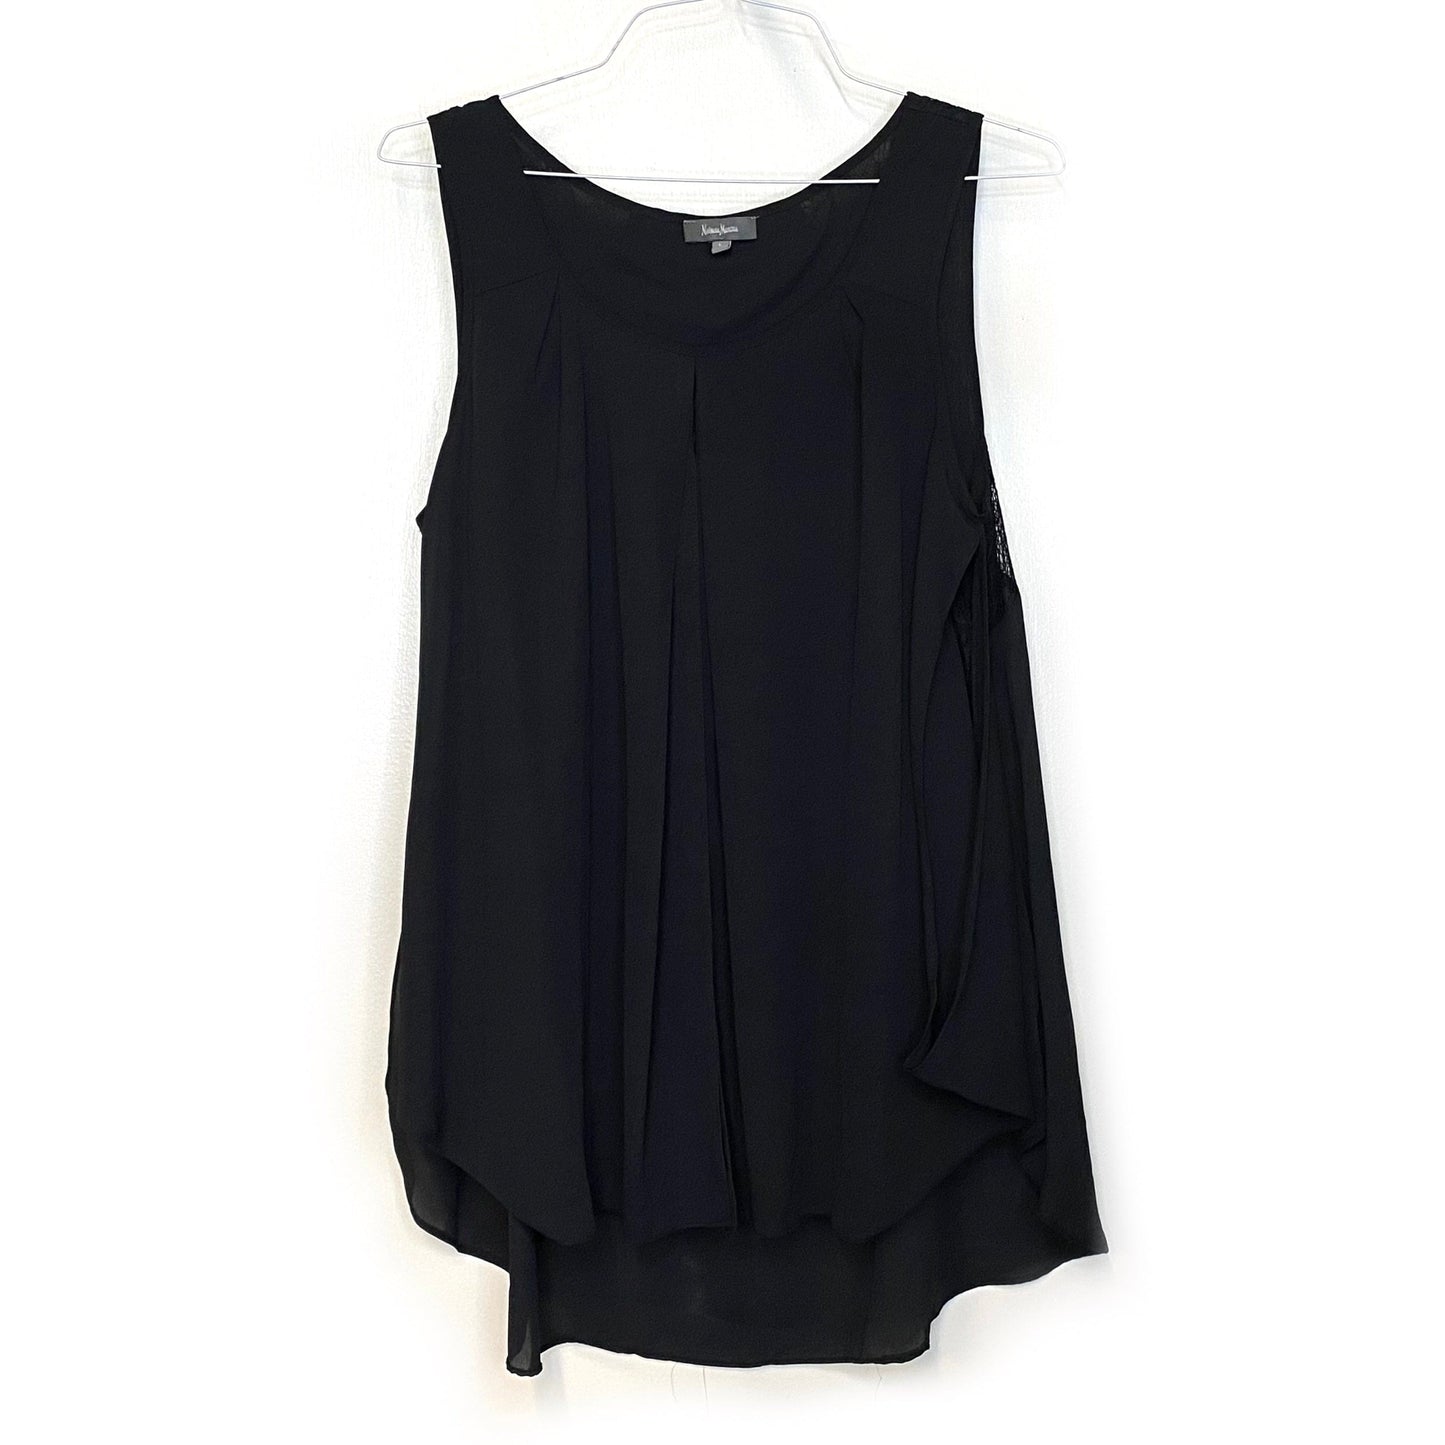 Neiman Marcus Womens Size L Black Sleeveless Lacey Top Shirt EUC